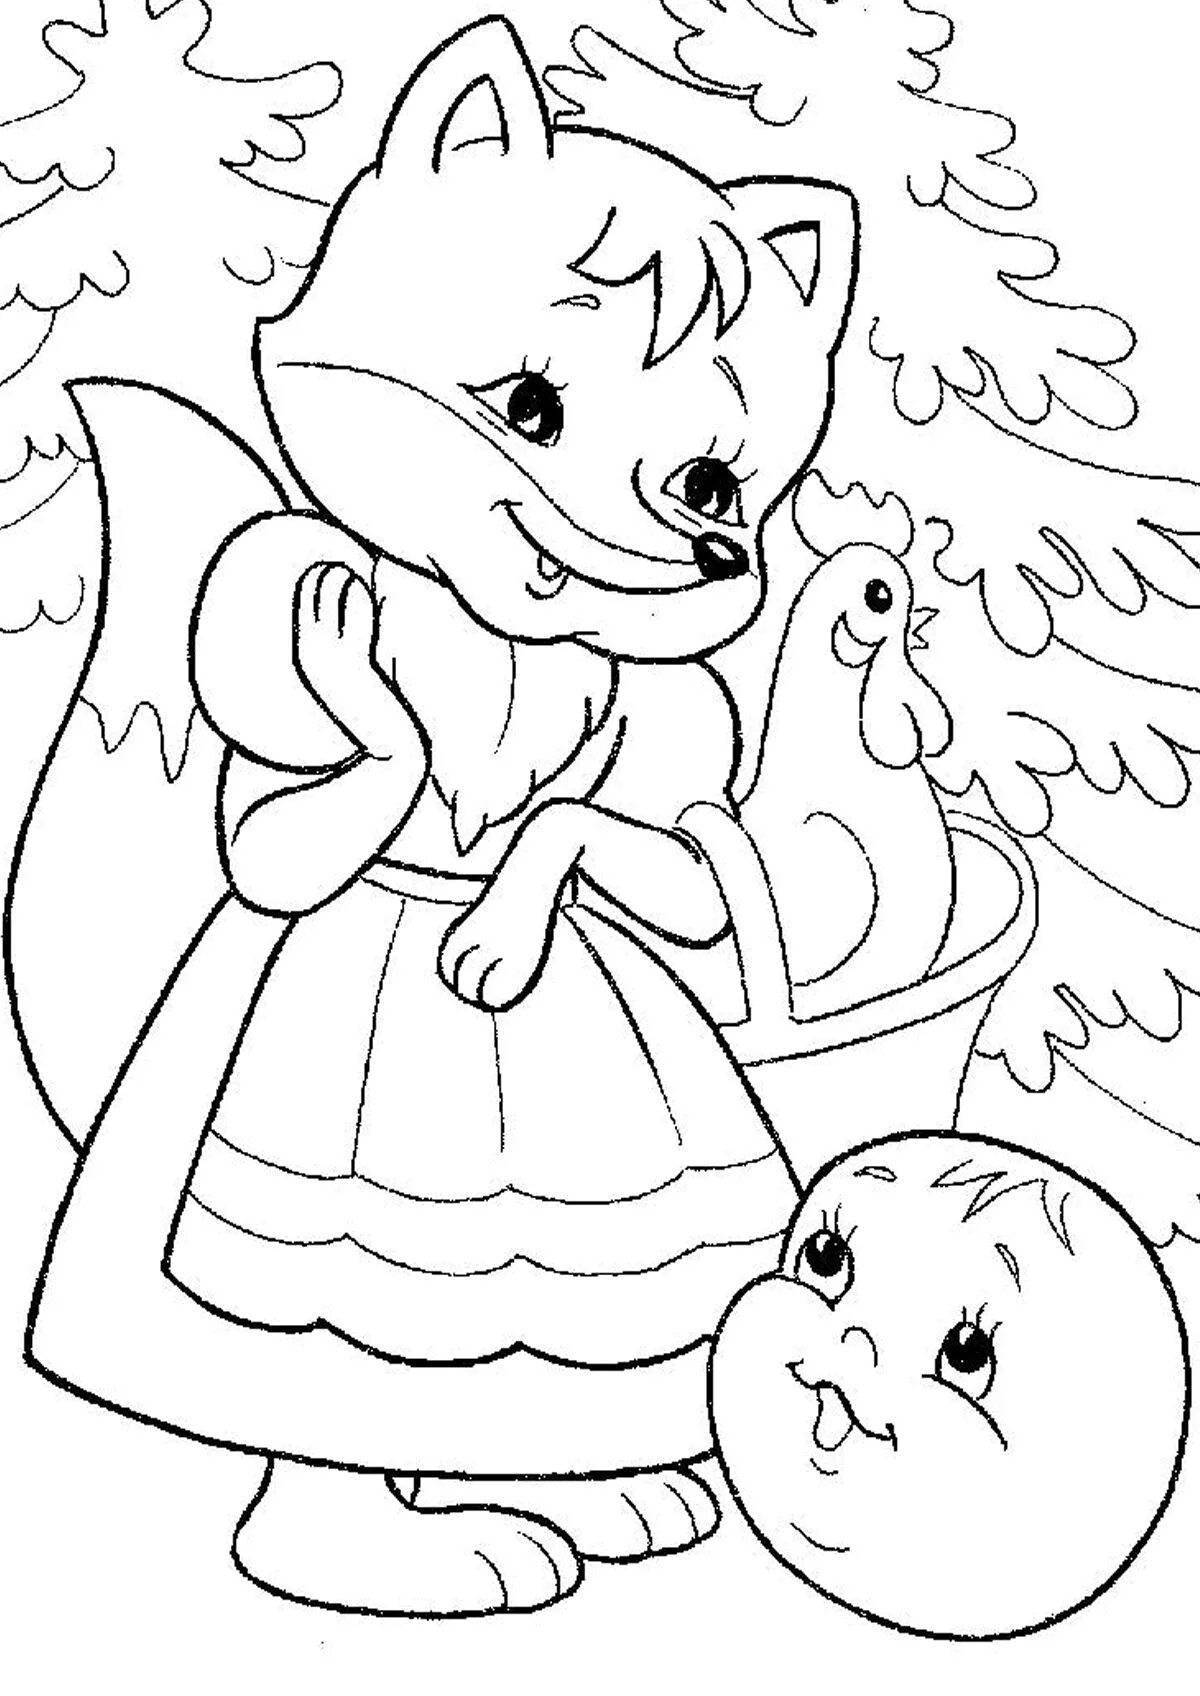 Fairy bun coloring book for kids